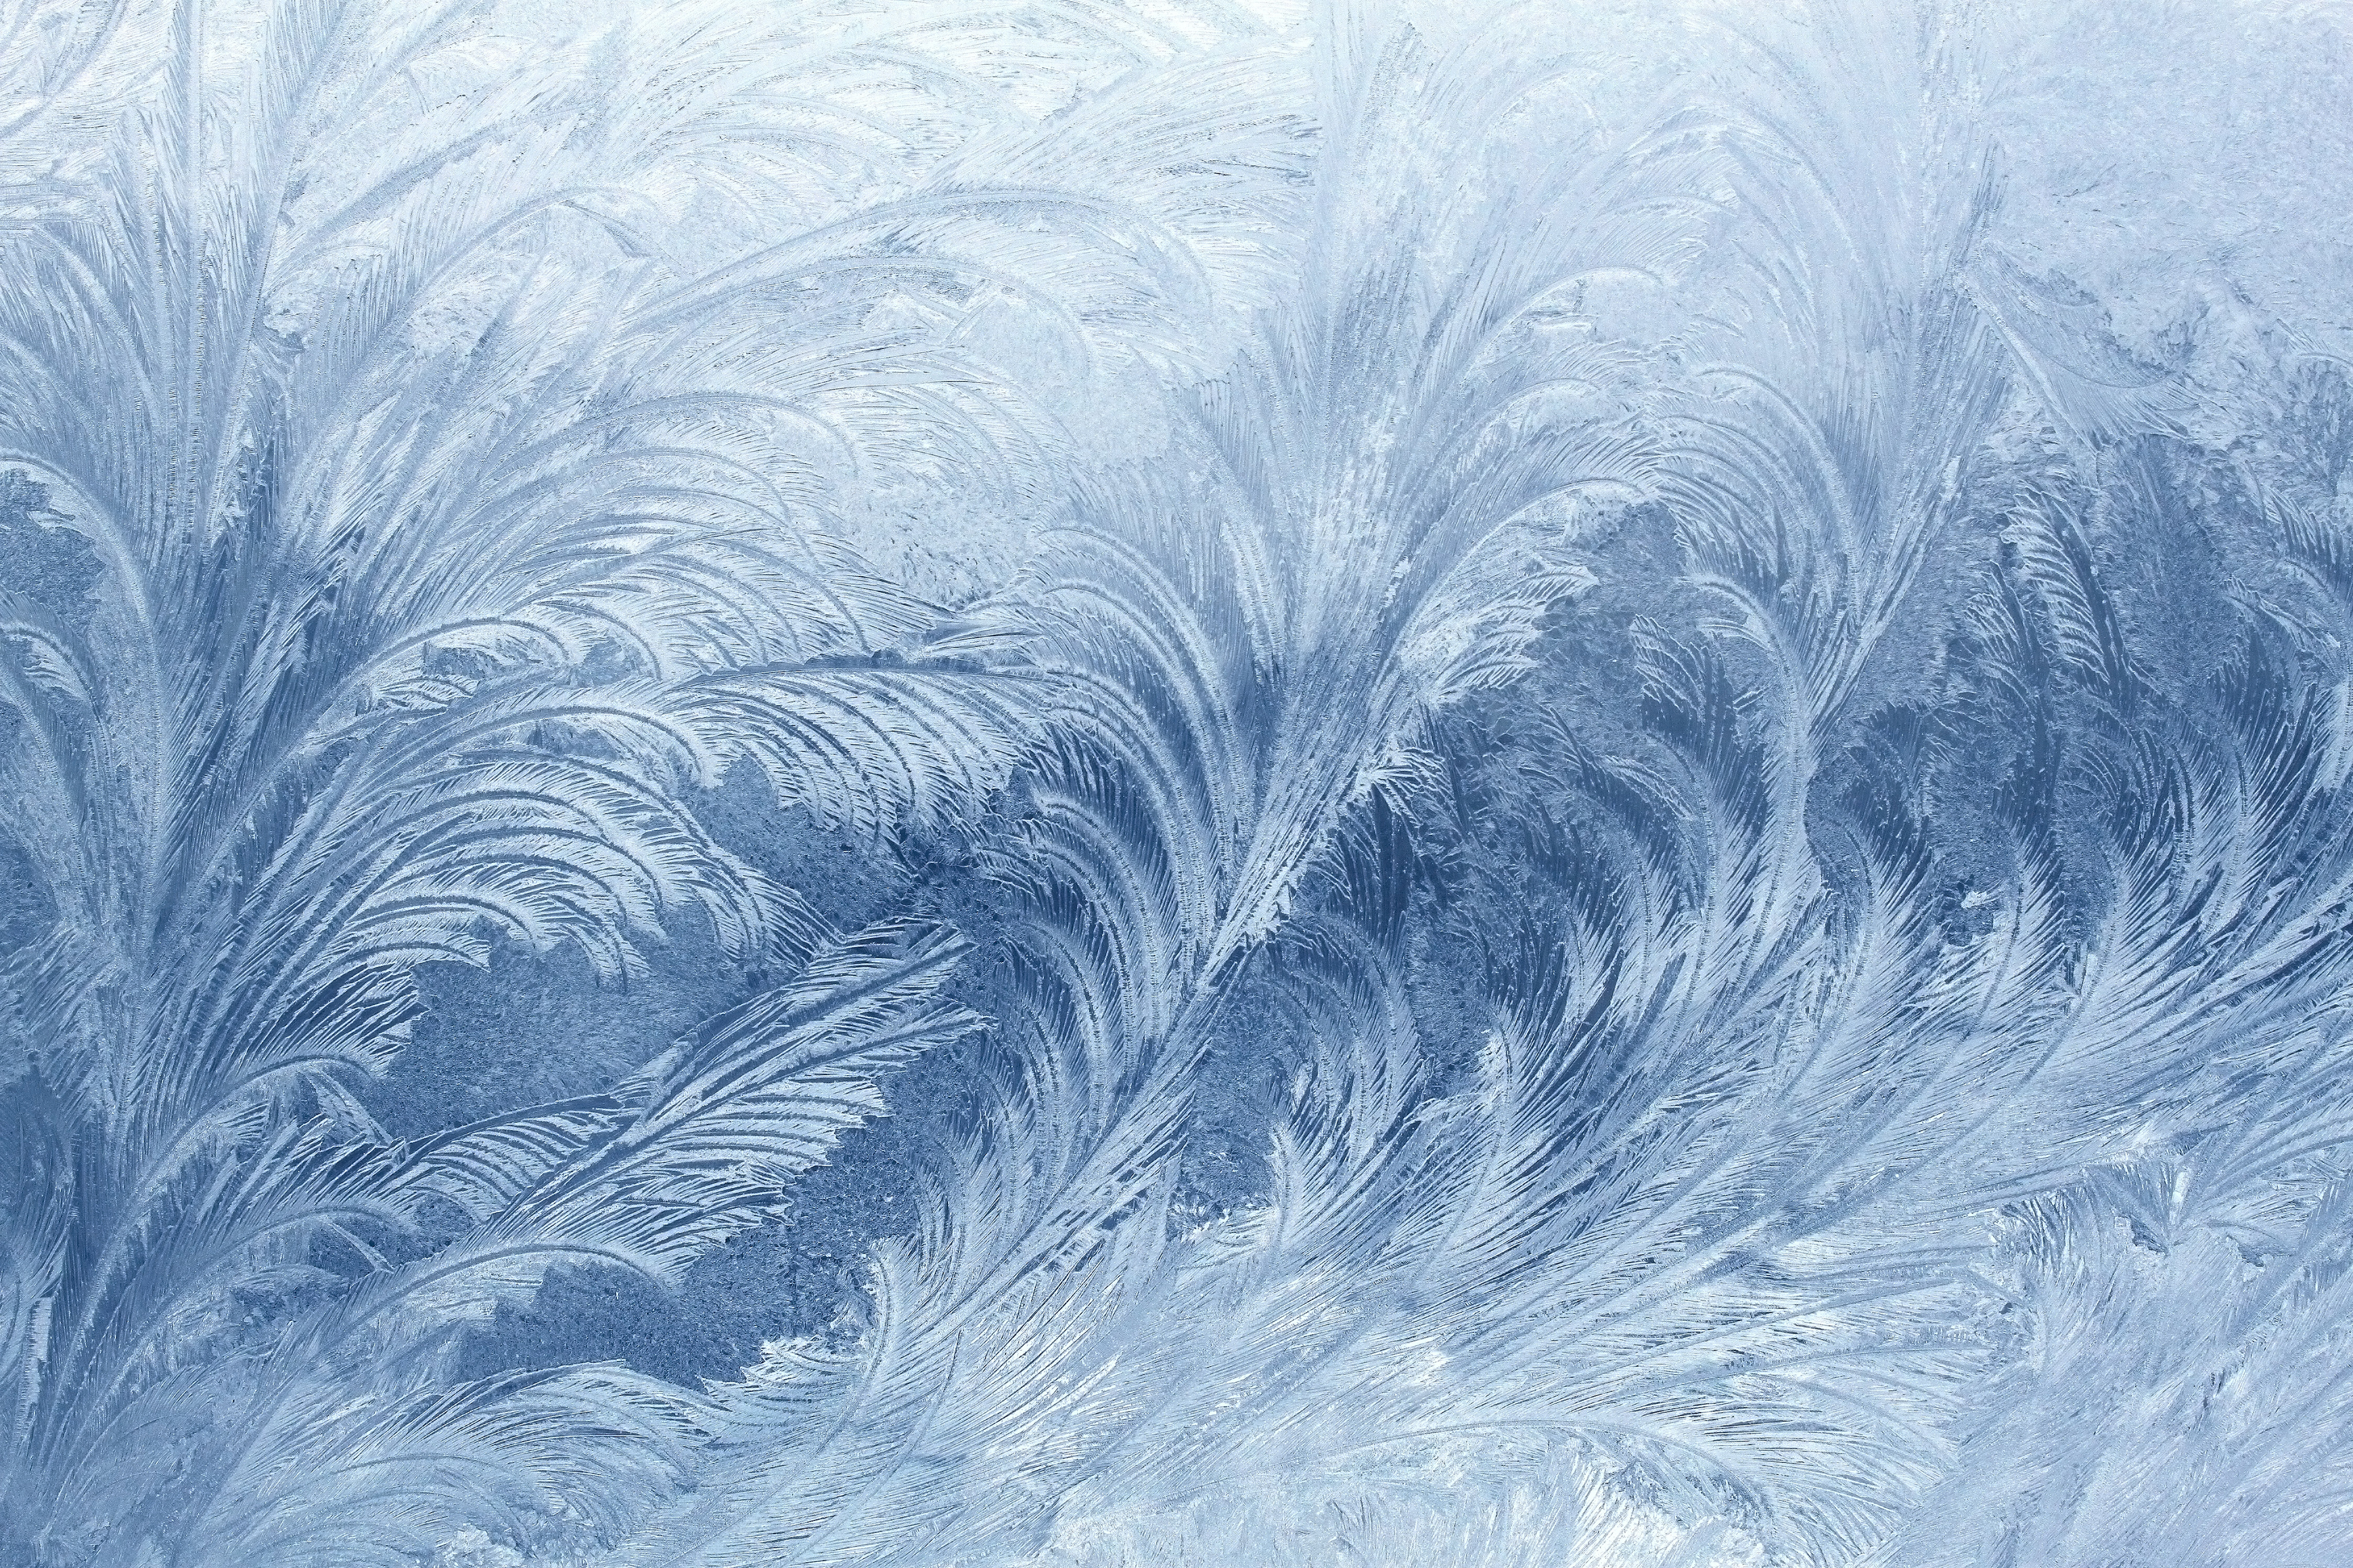  ice patterns winter frost wallpaper 4100x2733 228474 WallpaperUP